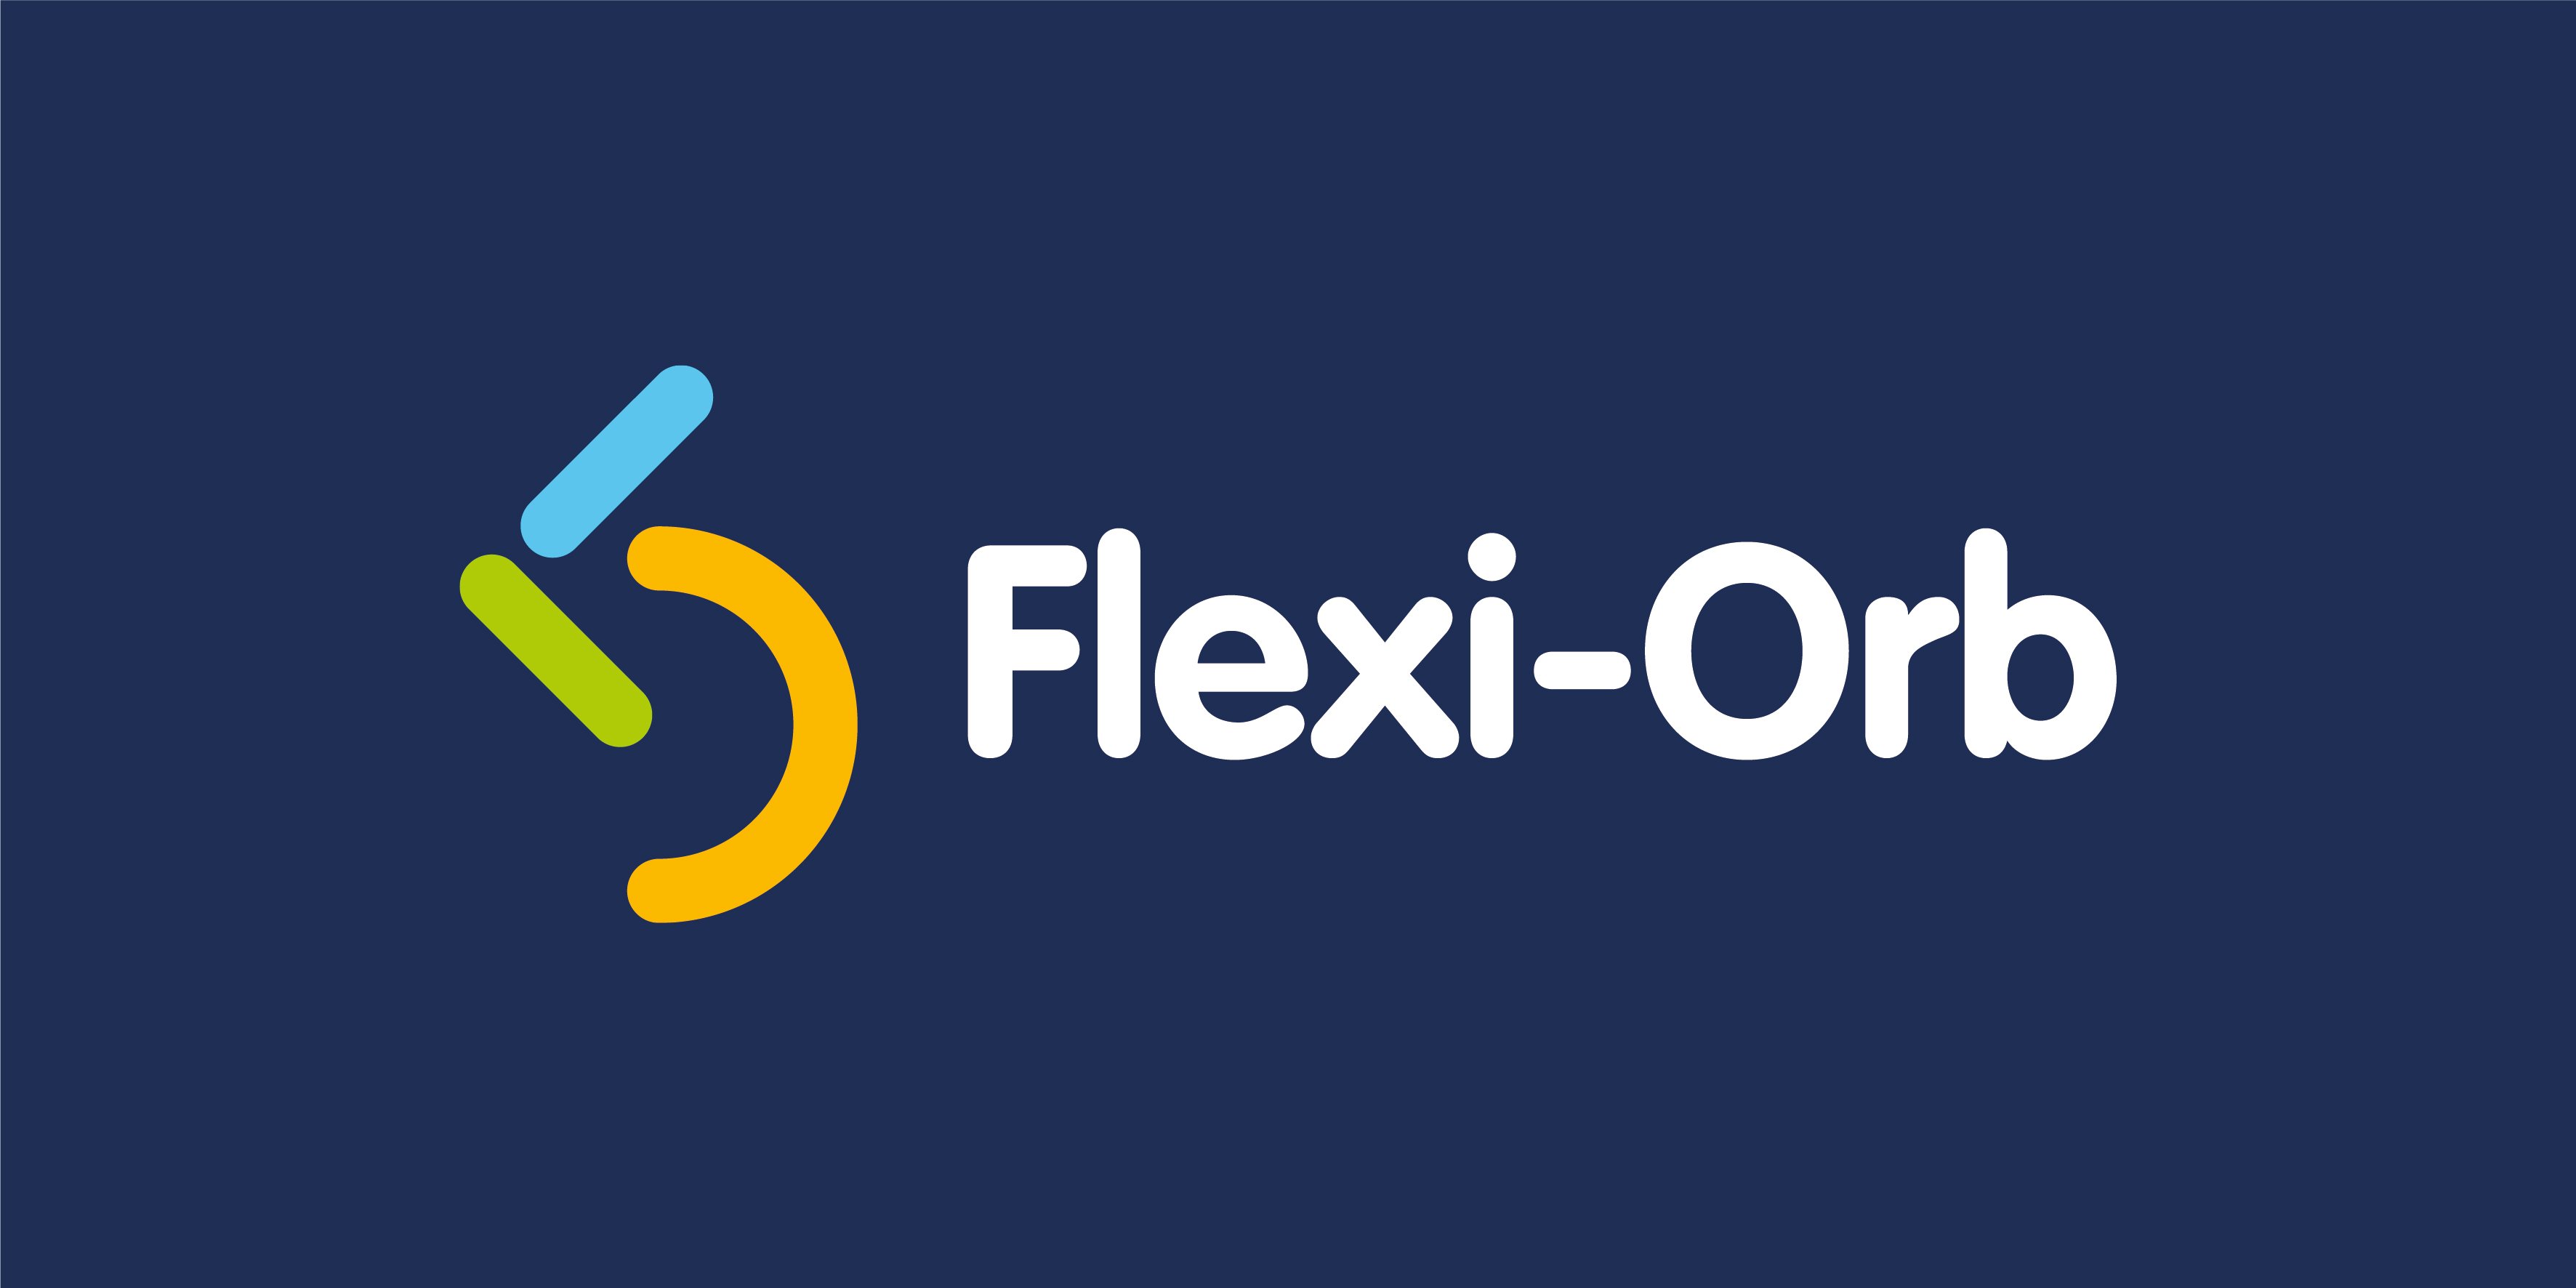 Flexi-Orb